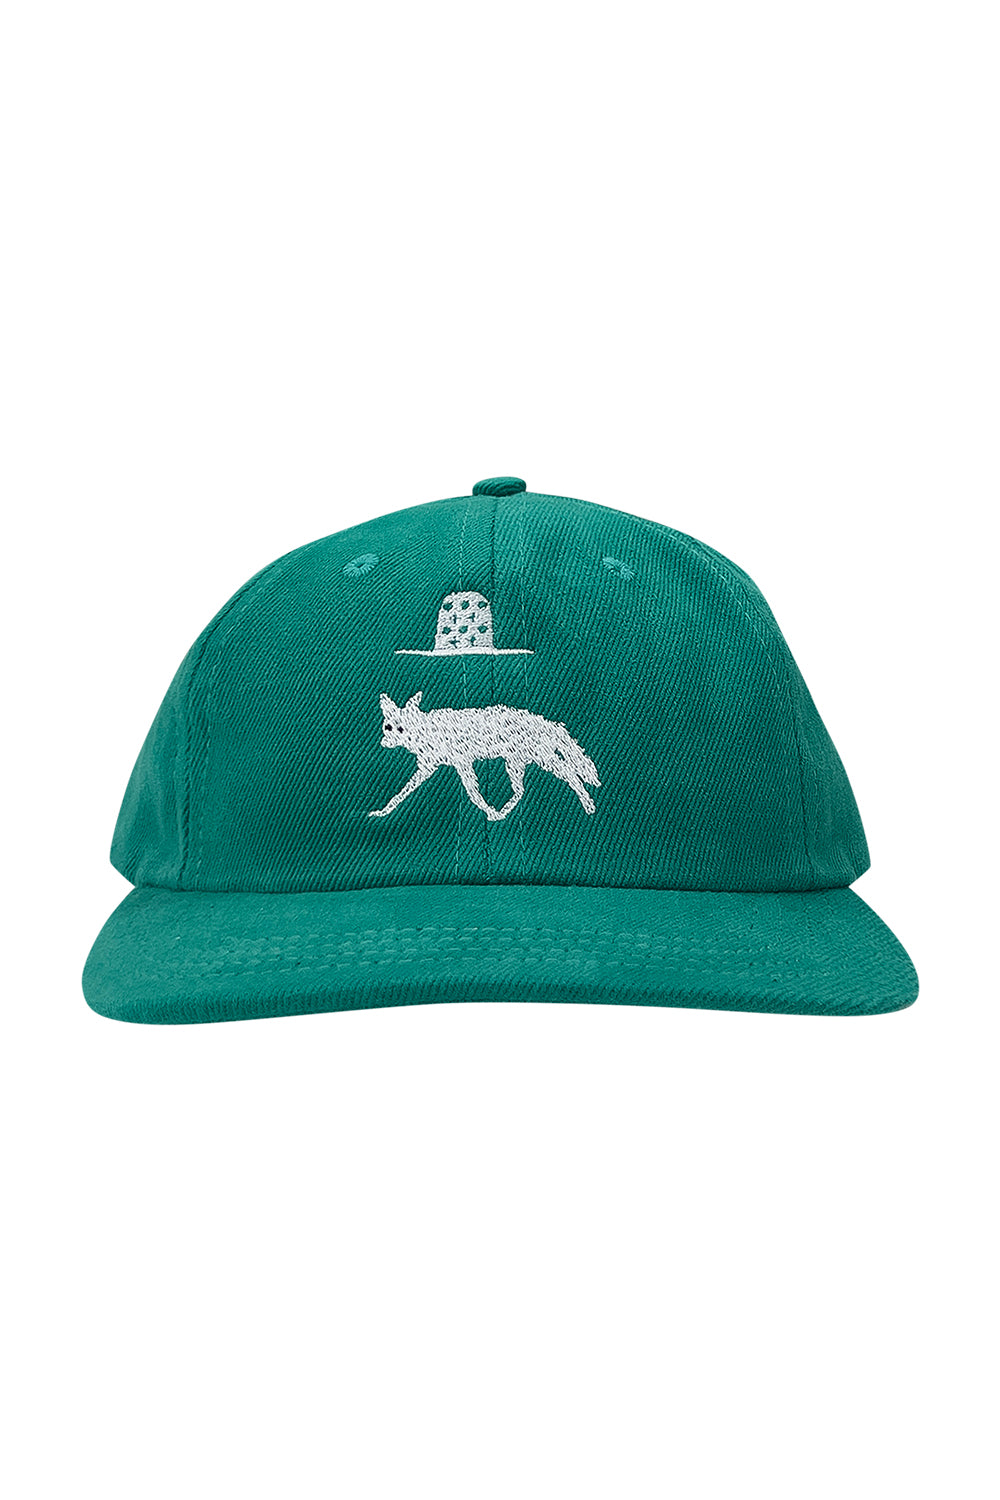 Coyote Twill Cap | Jungmaven Hemp Clothing & Accessories / Color: Jade Green